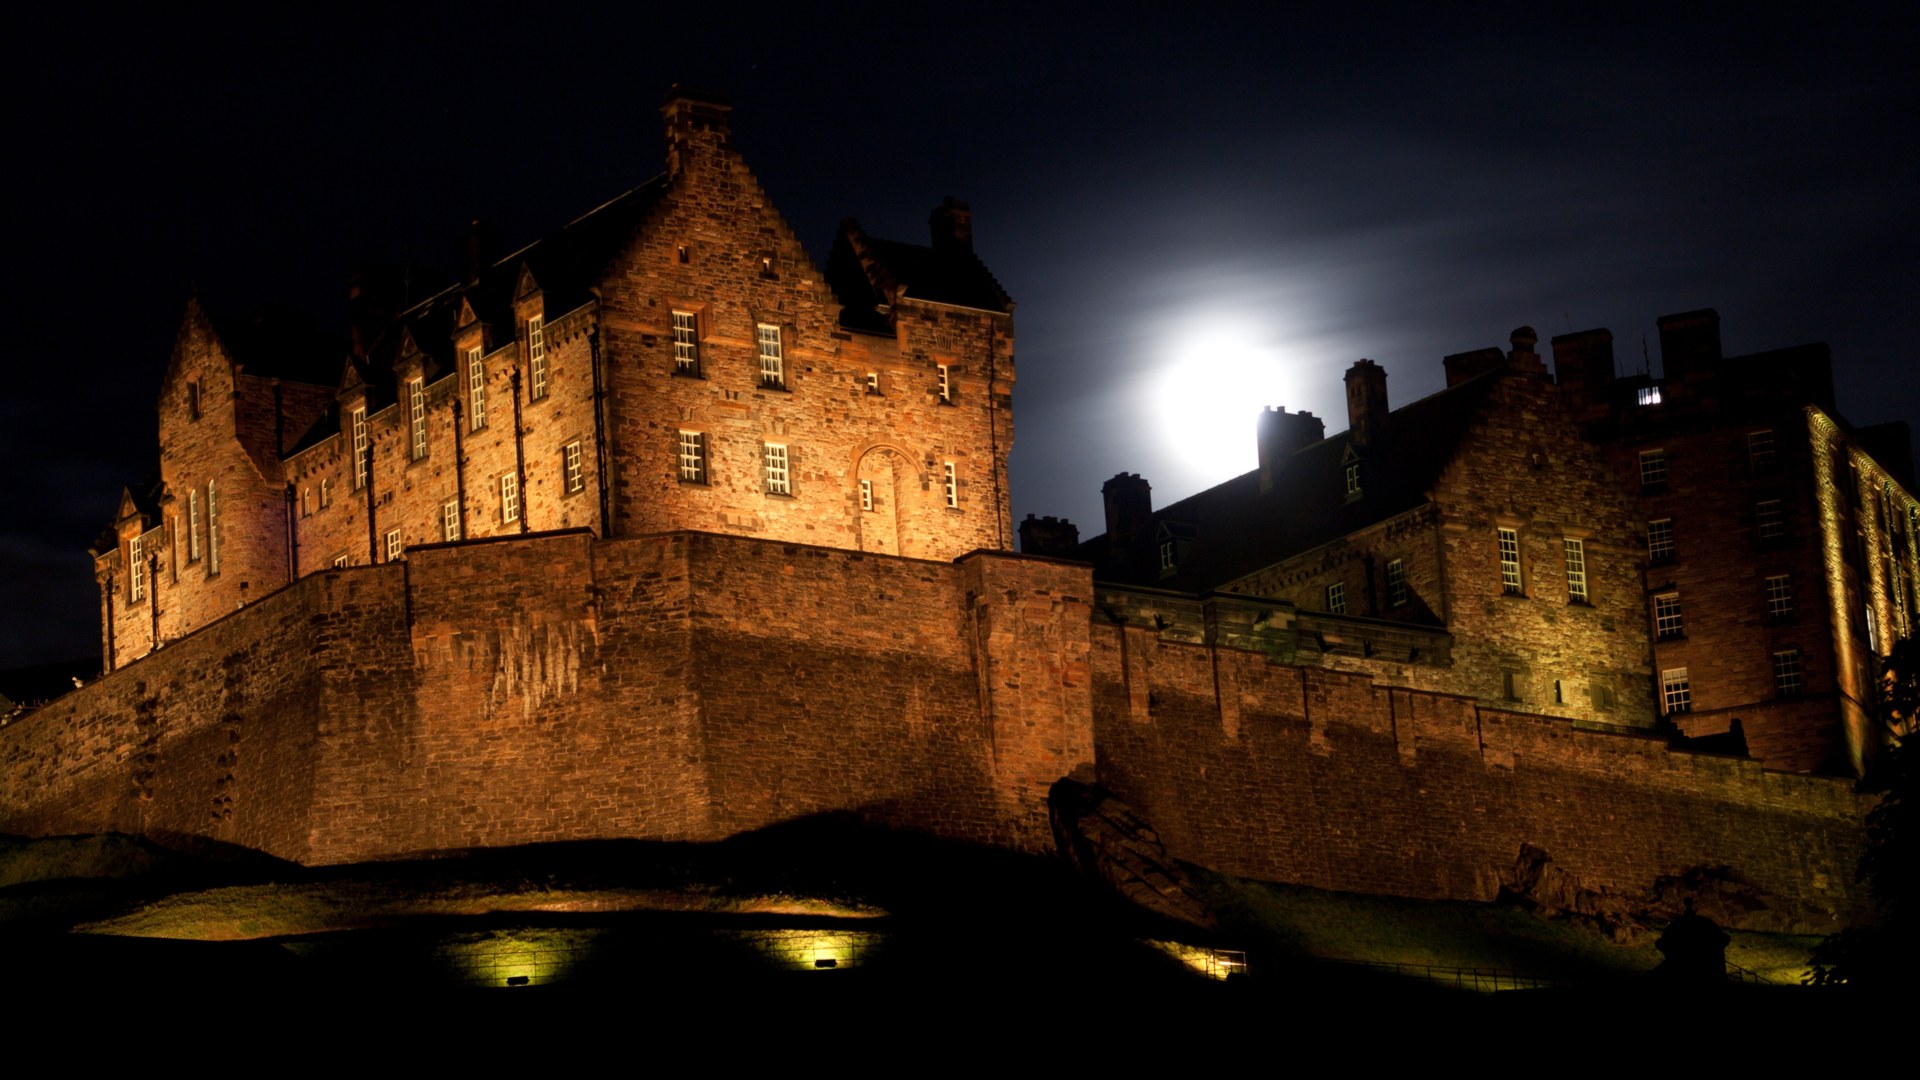 Edinburgh Castle is one of the haunted places in Edinburgh